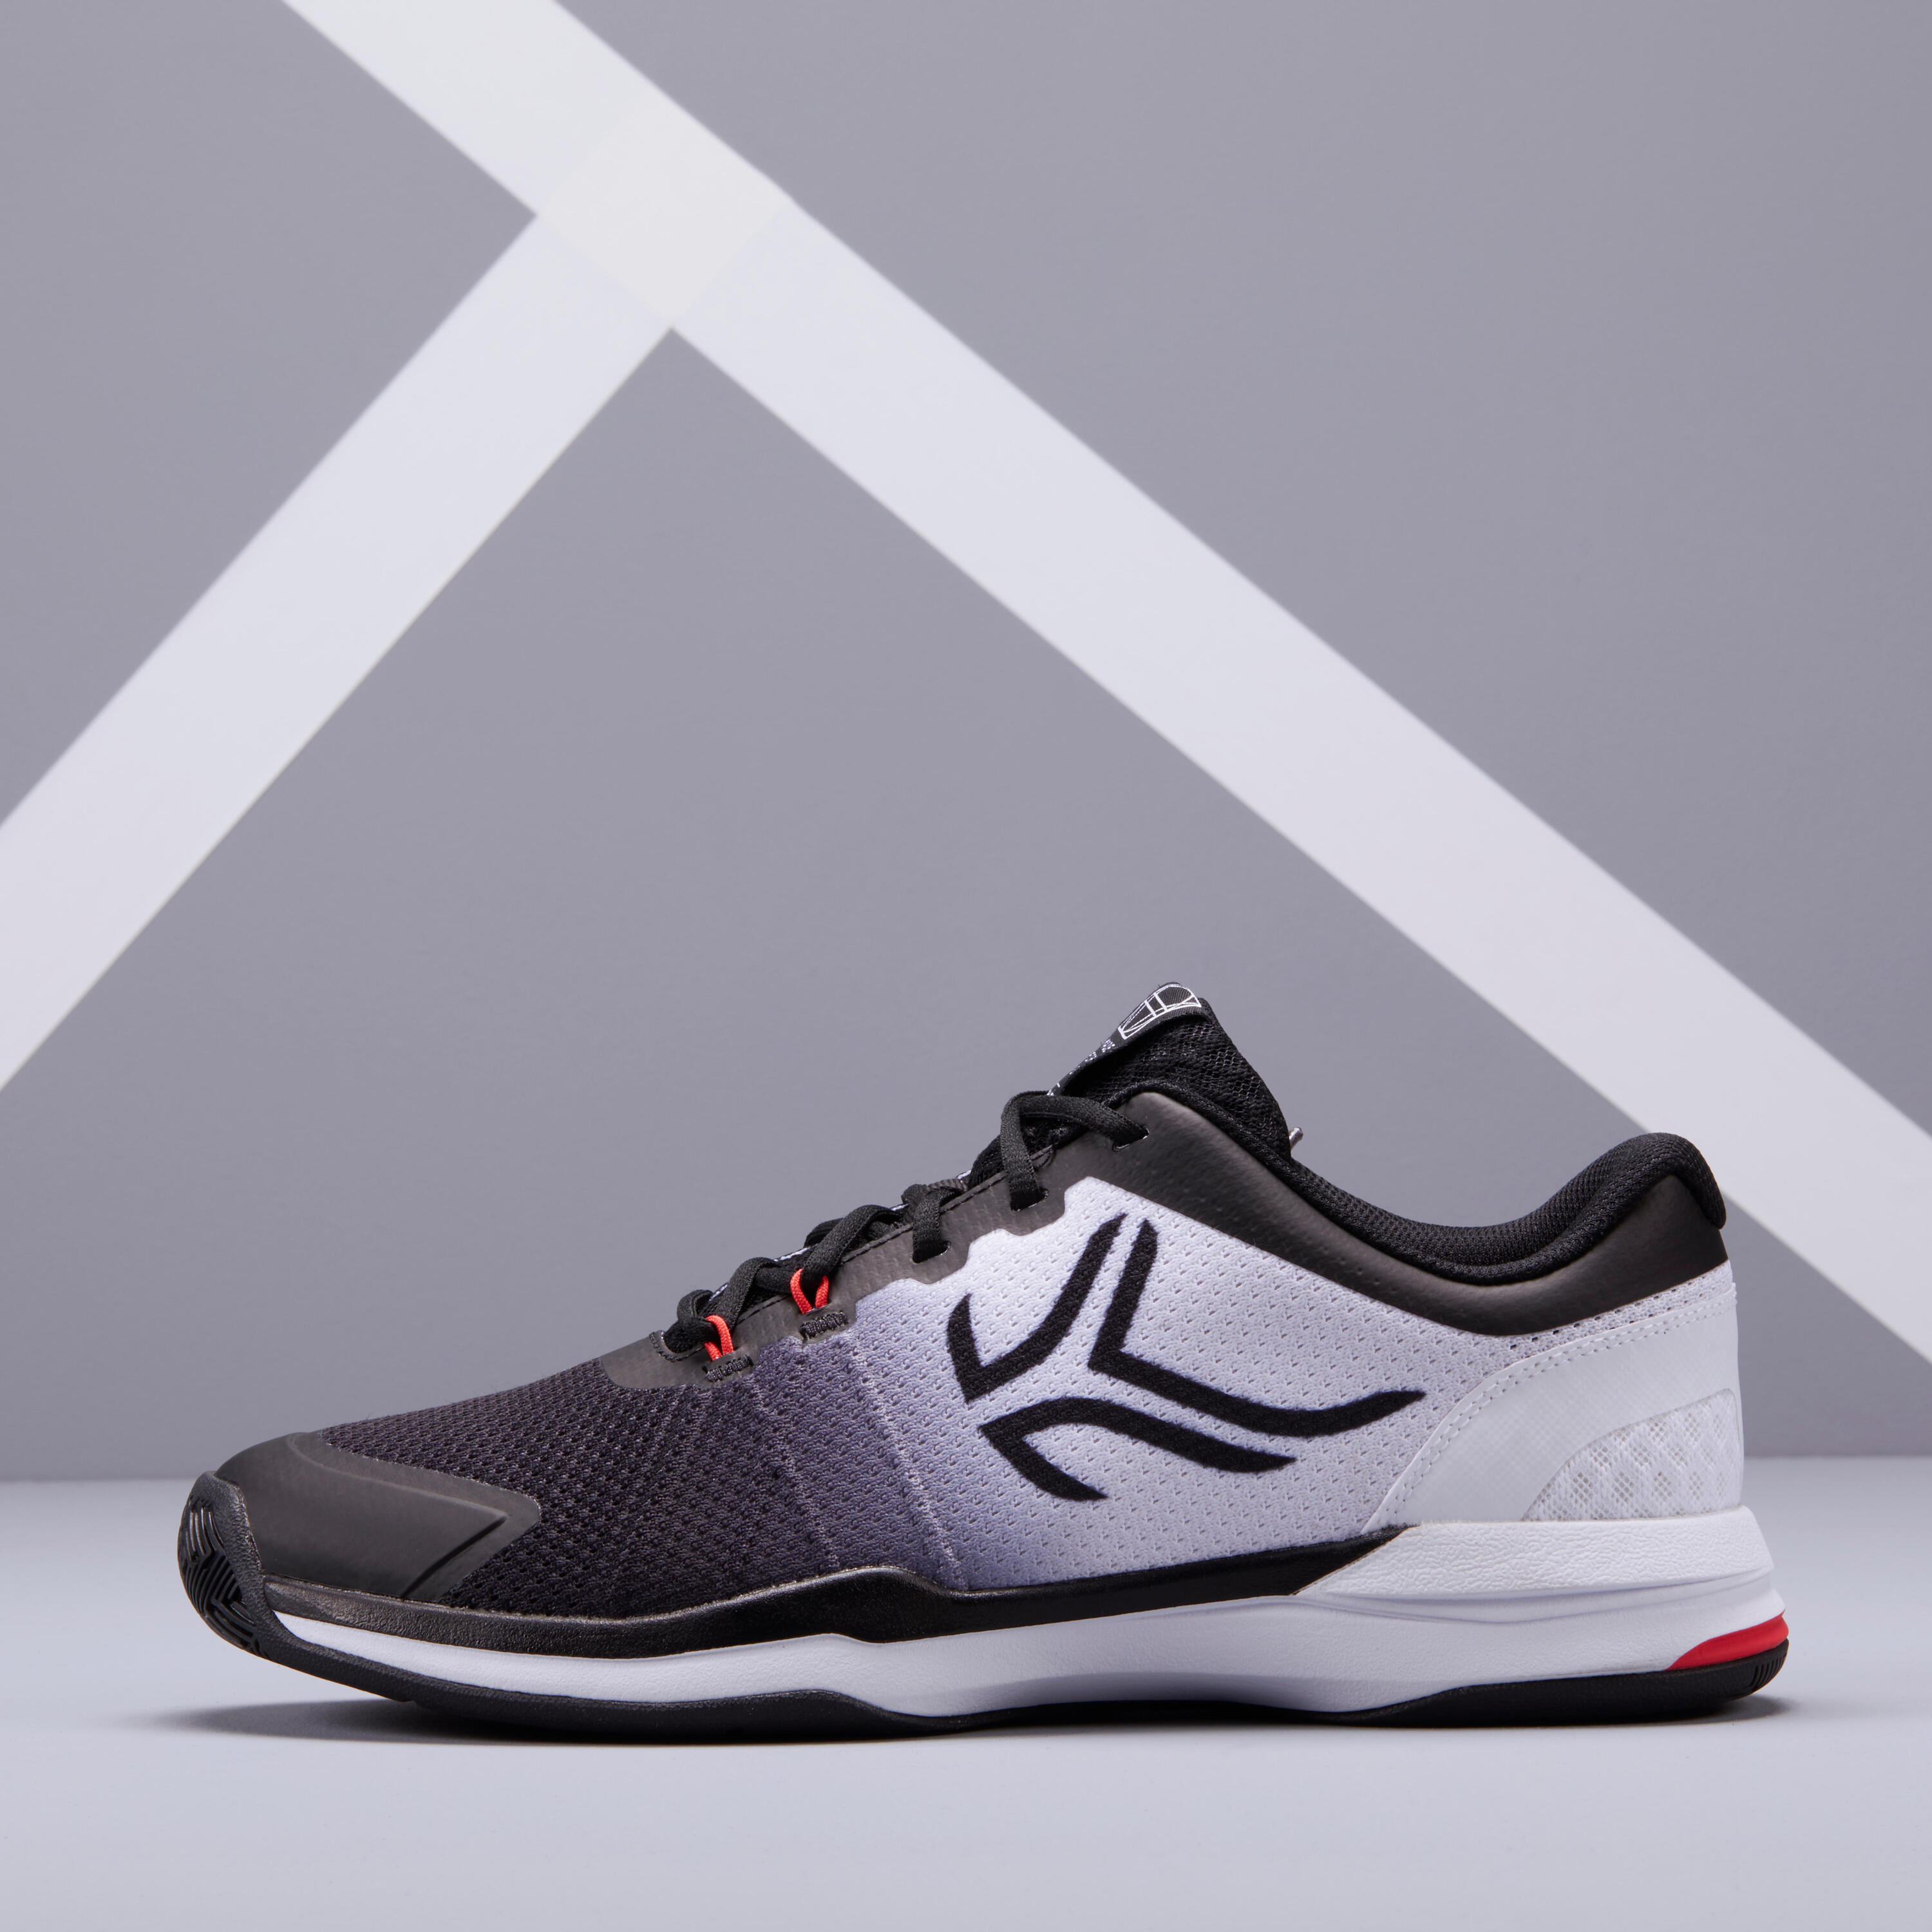 Men's Multi-Court Tennis Shoes TS590 - White/Black 4/8